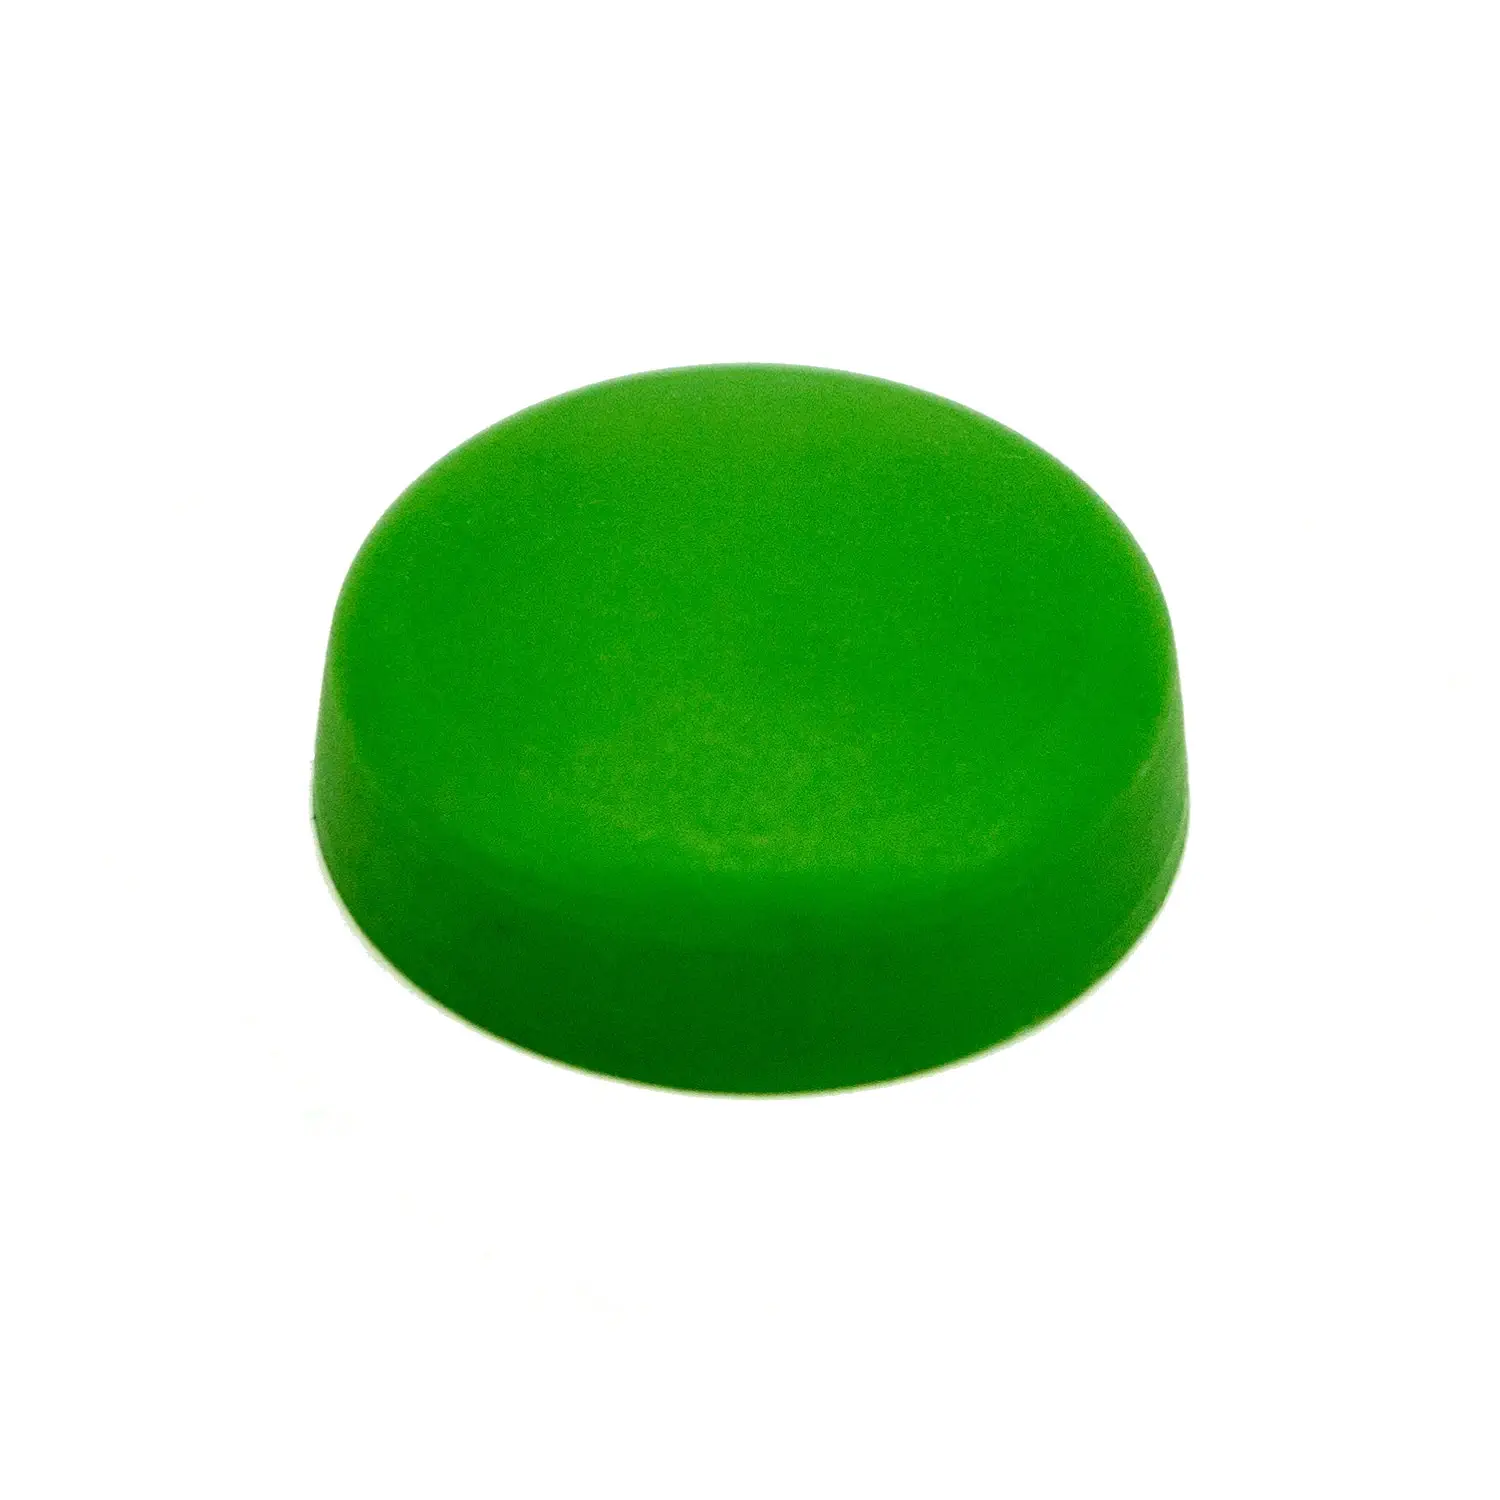 Schraubenkappe hellgrün 16mm